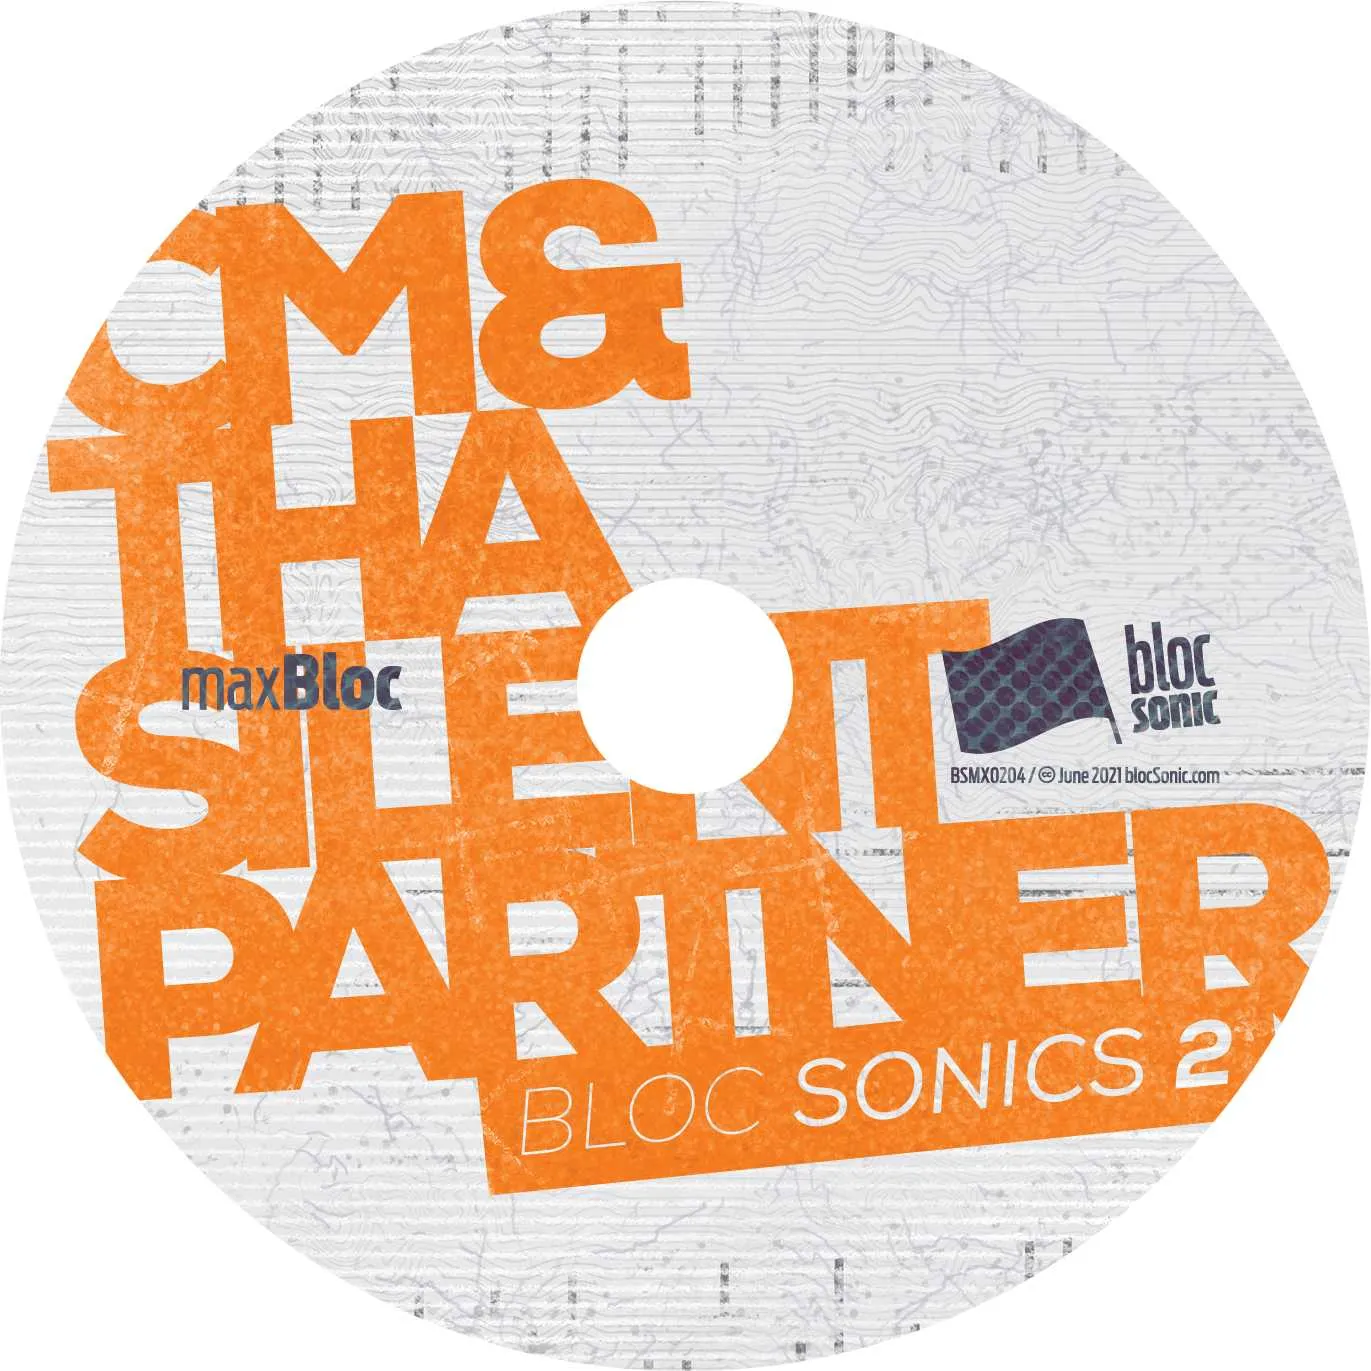 Album disc for “bloc Sonics 2” by CM &amp; Tha Silent Partner